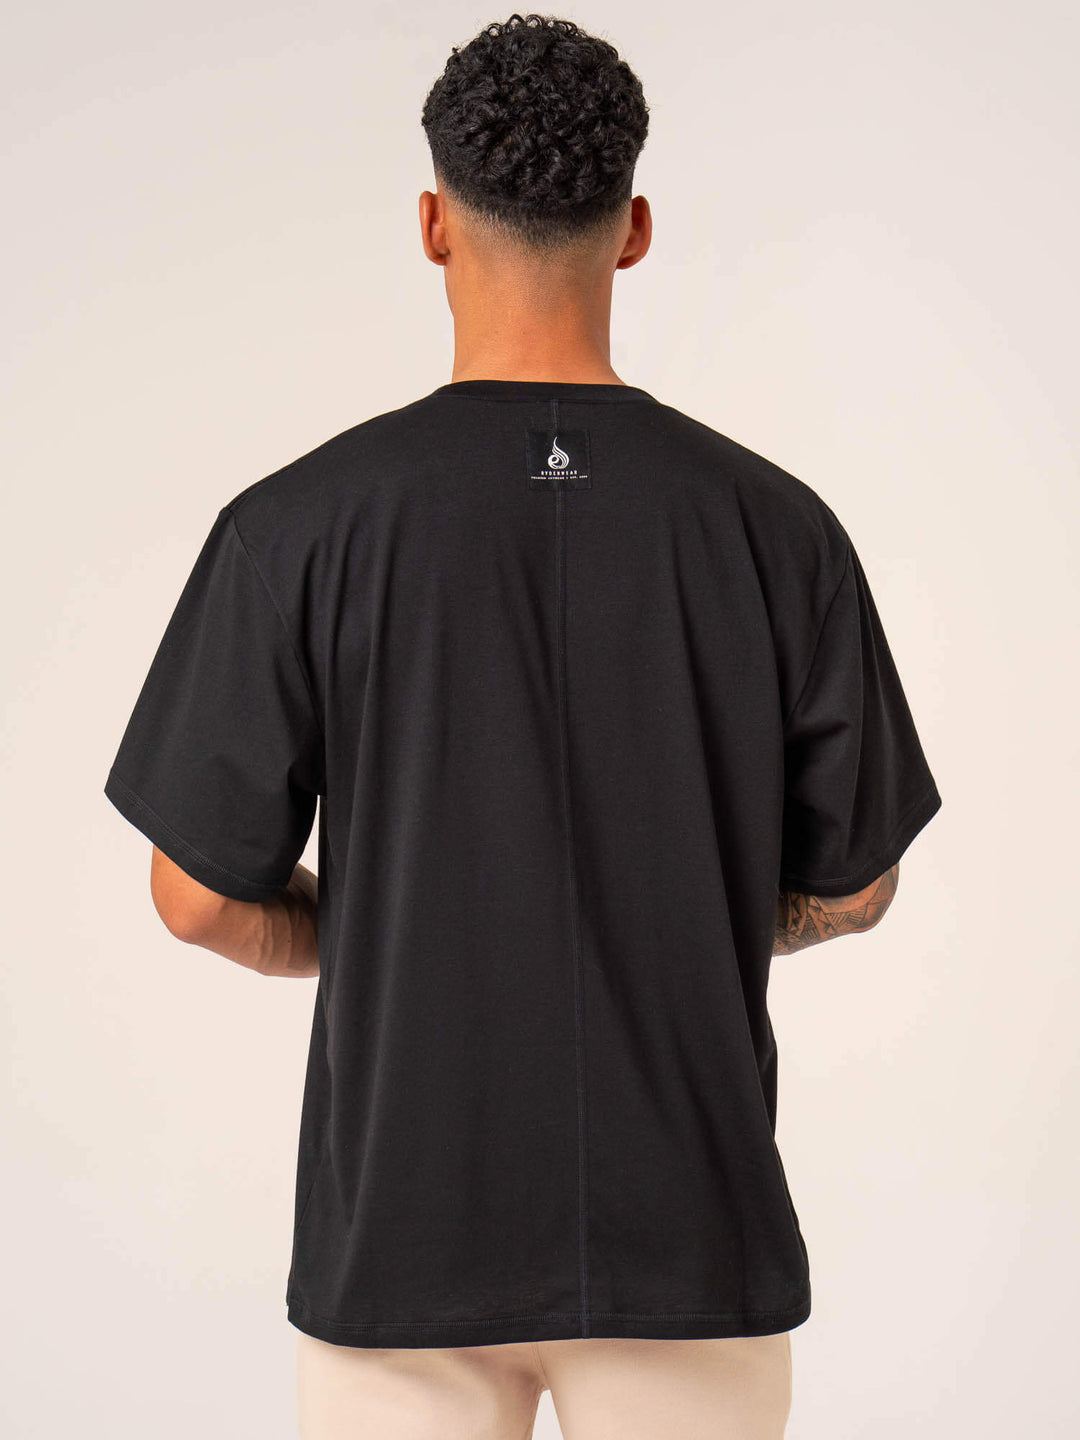 Terrain T-Shirt - Black Clothing Ryderwear 